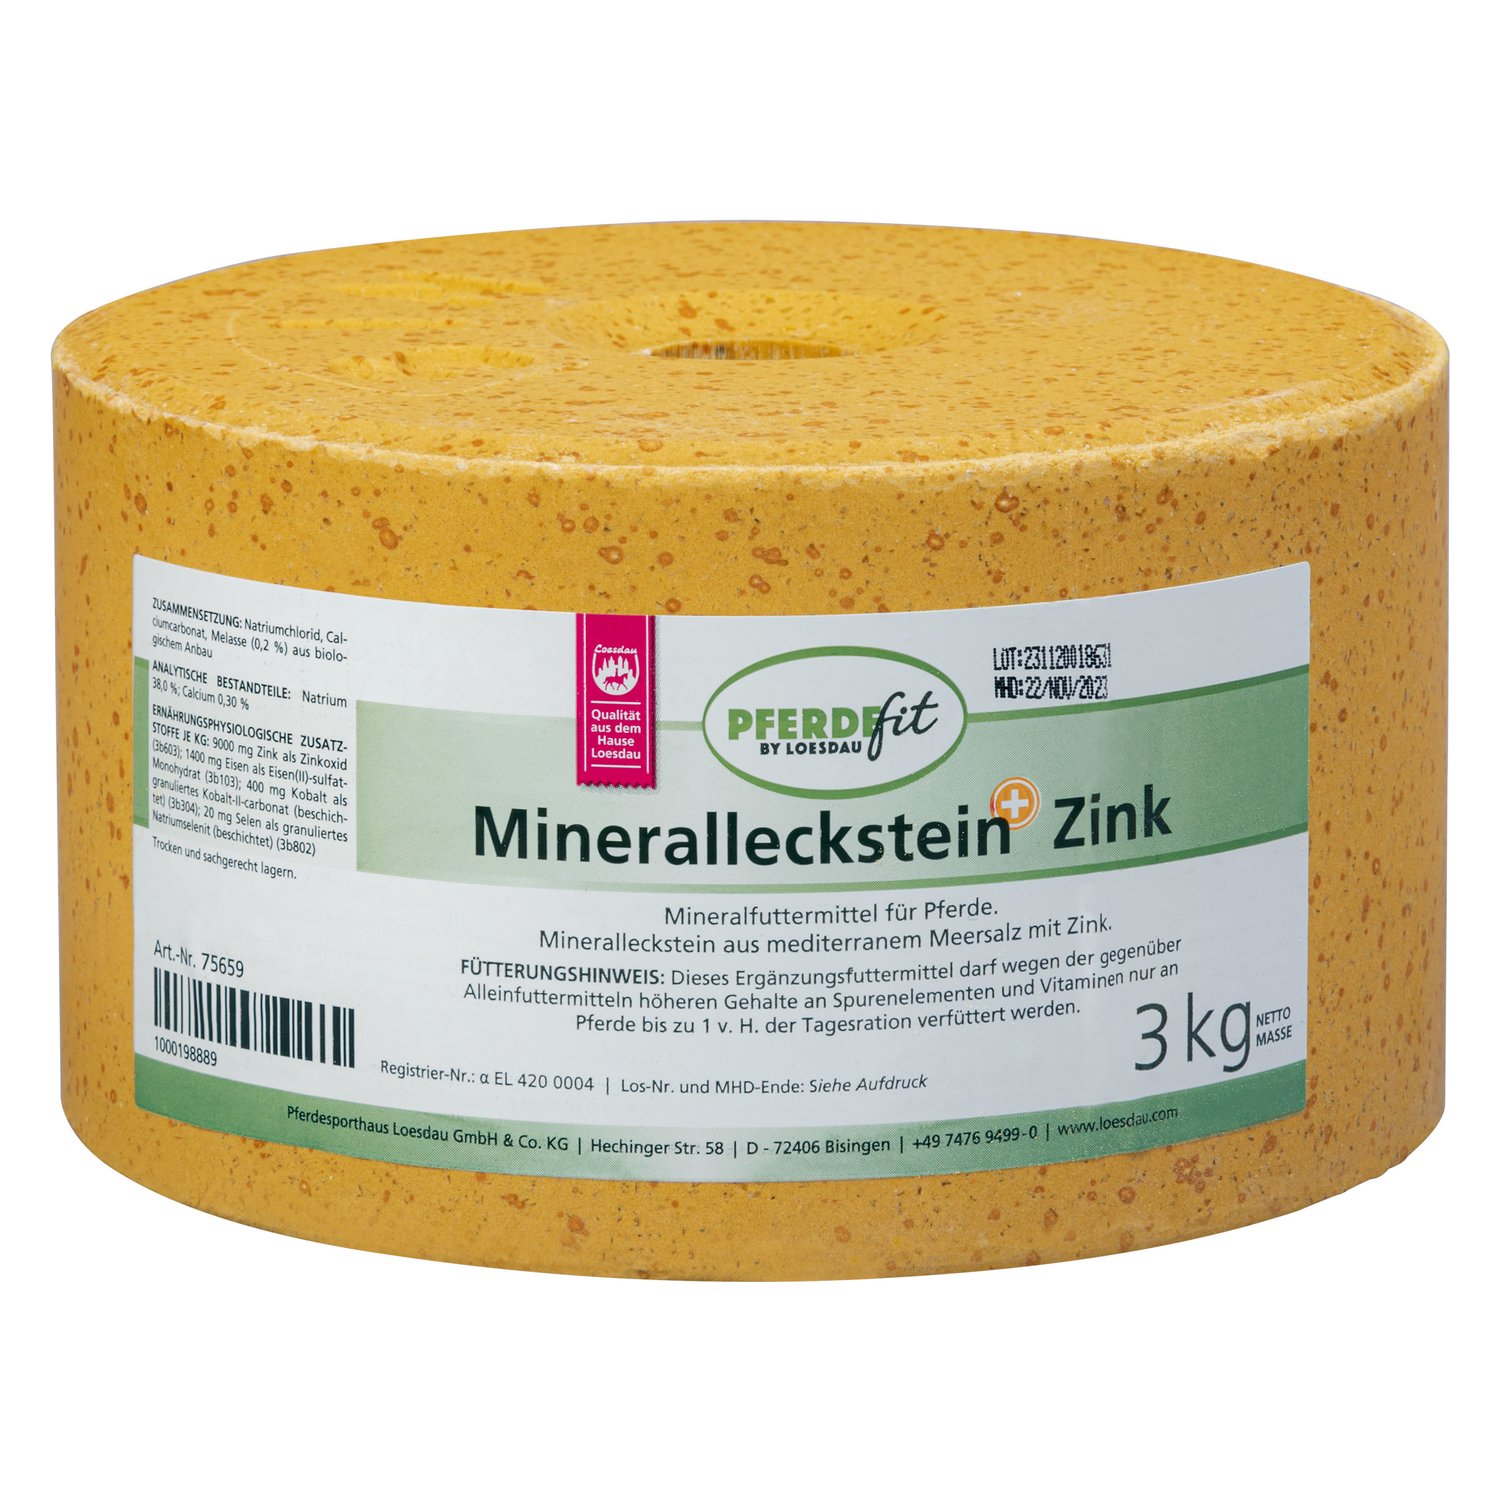 PFERDEfit by Loesdau Mineralleckstein Plus Zink 3 kg